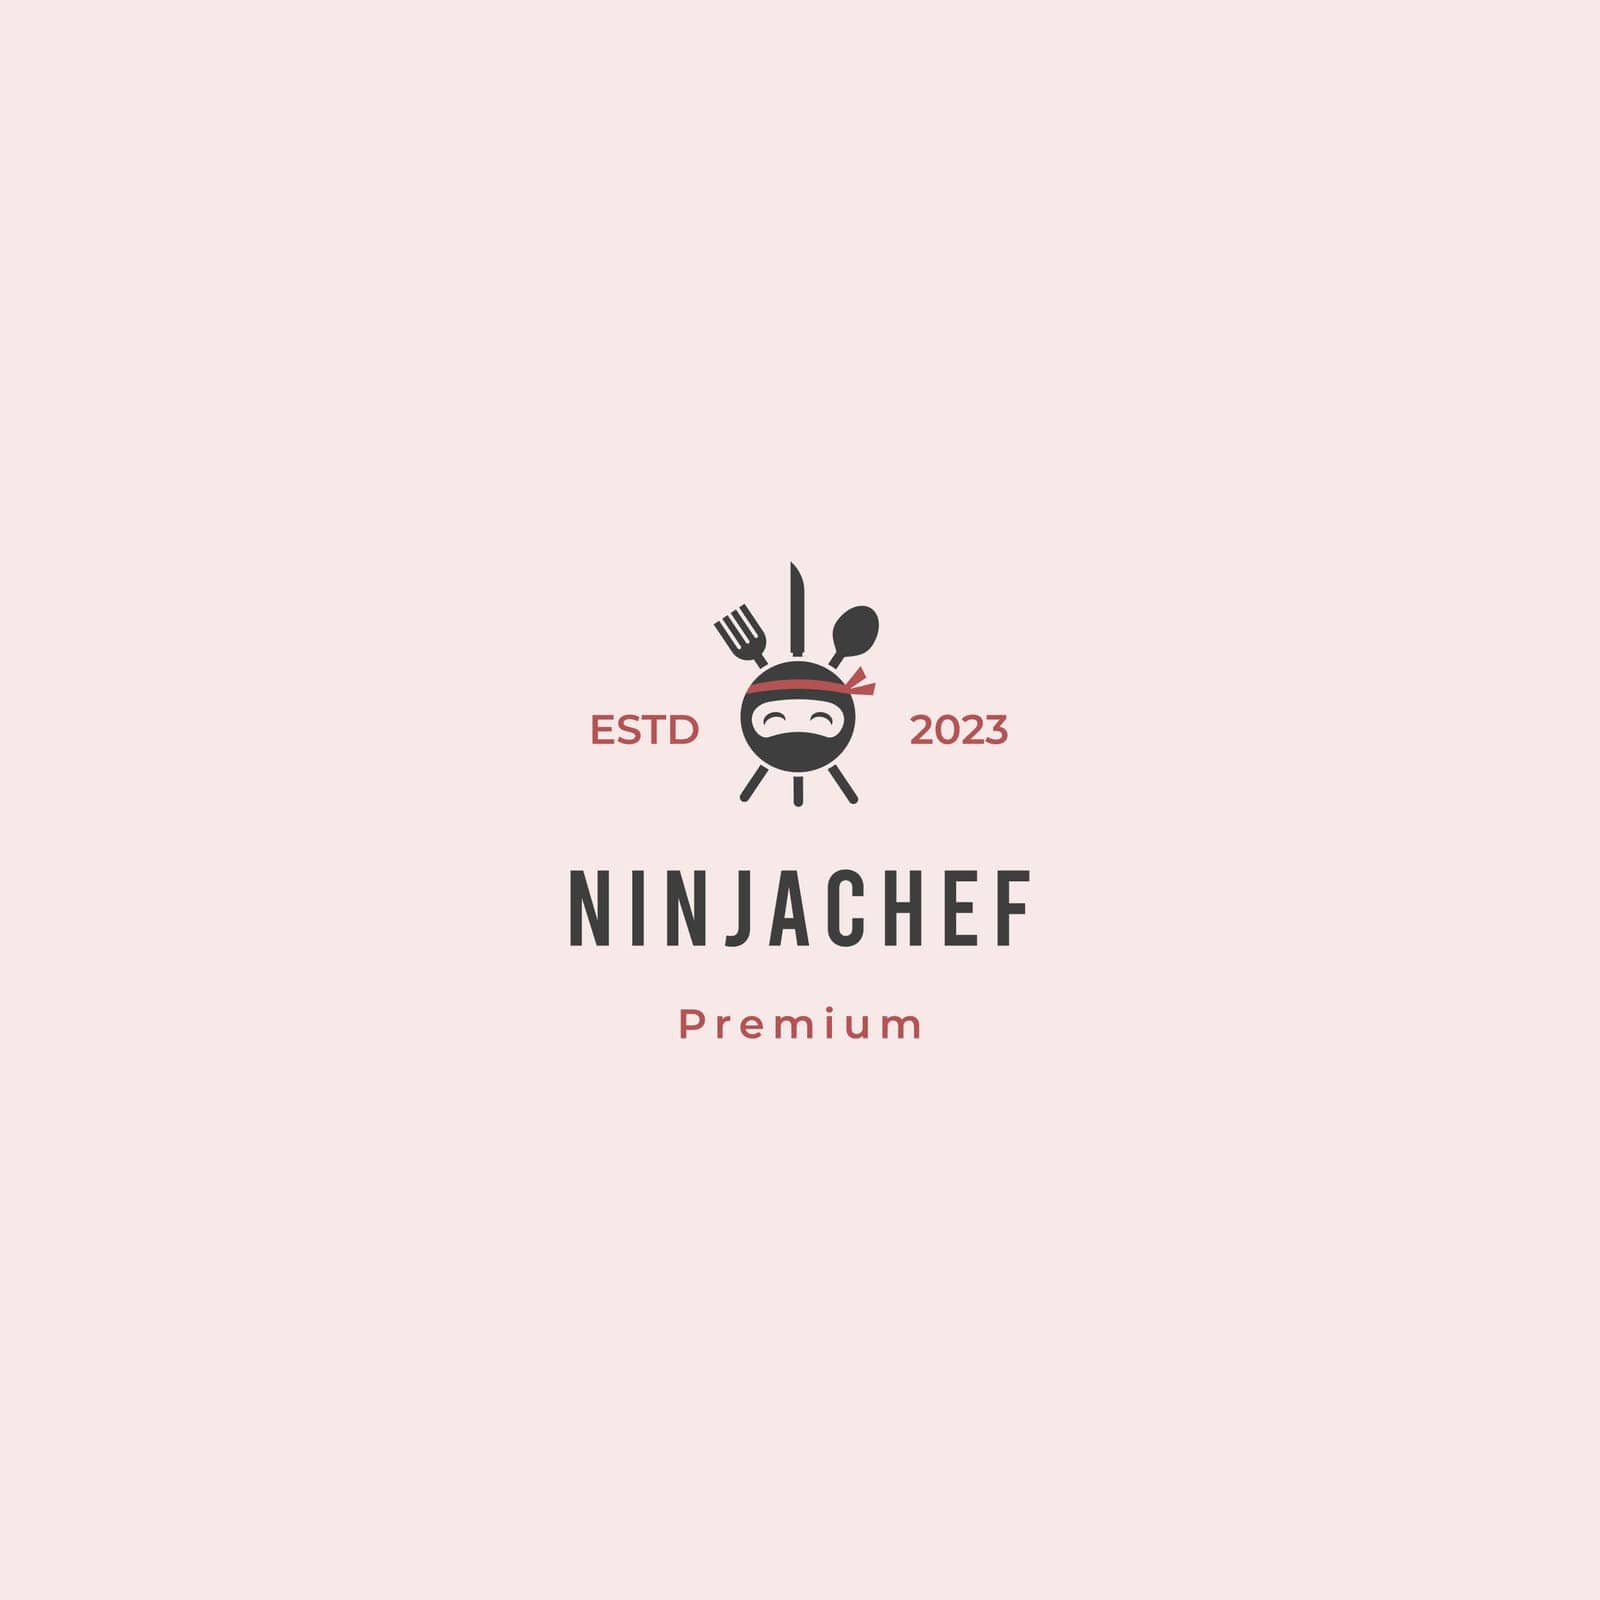 ninja chef logo design vintage concept, ninja with cutlery logo template by tanridai